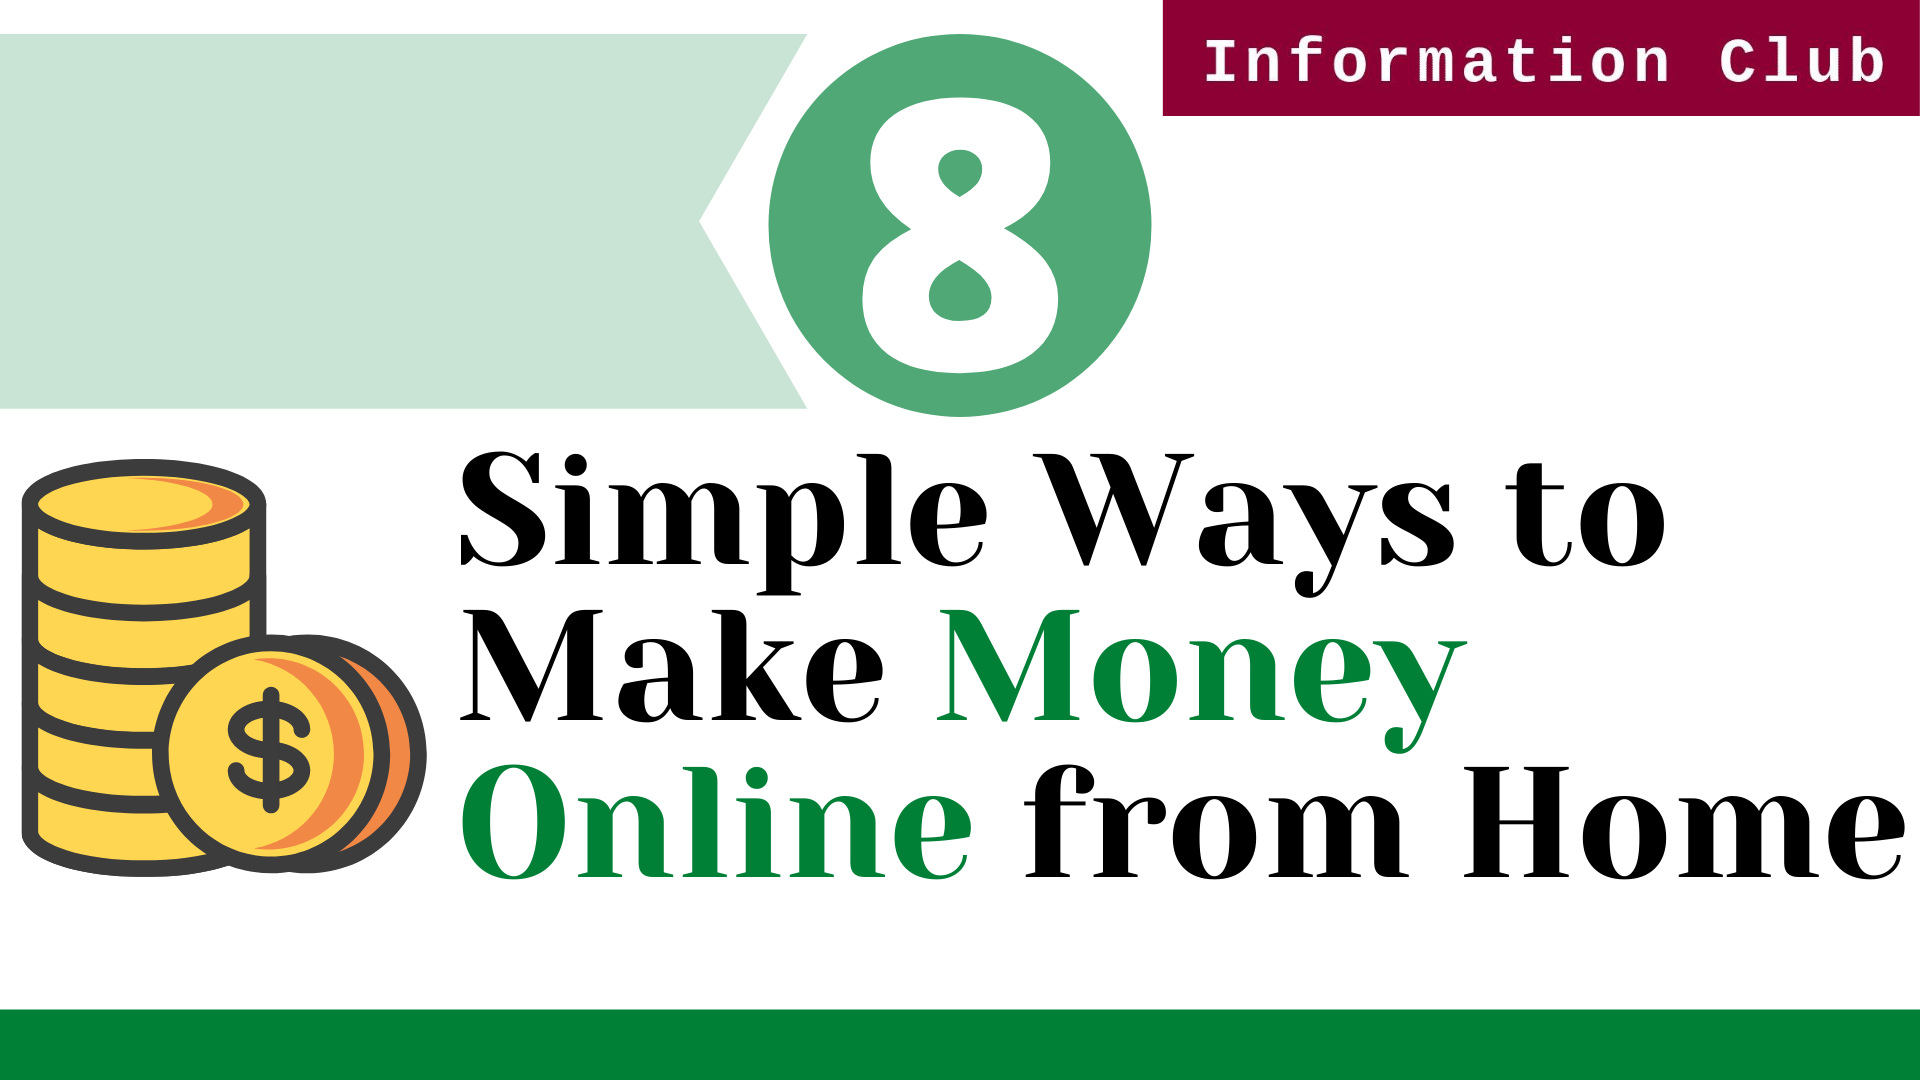 https://www.clubinfonline.com/2020/04/04/8-simple-ways-to-make-money-online/